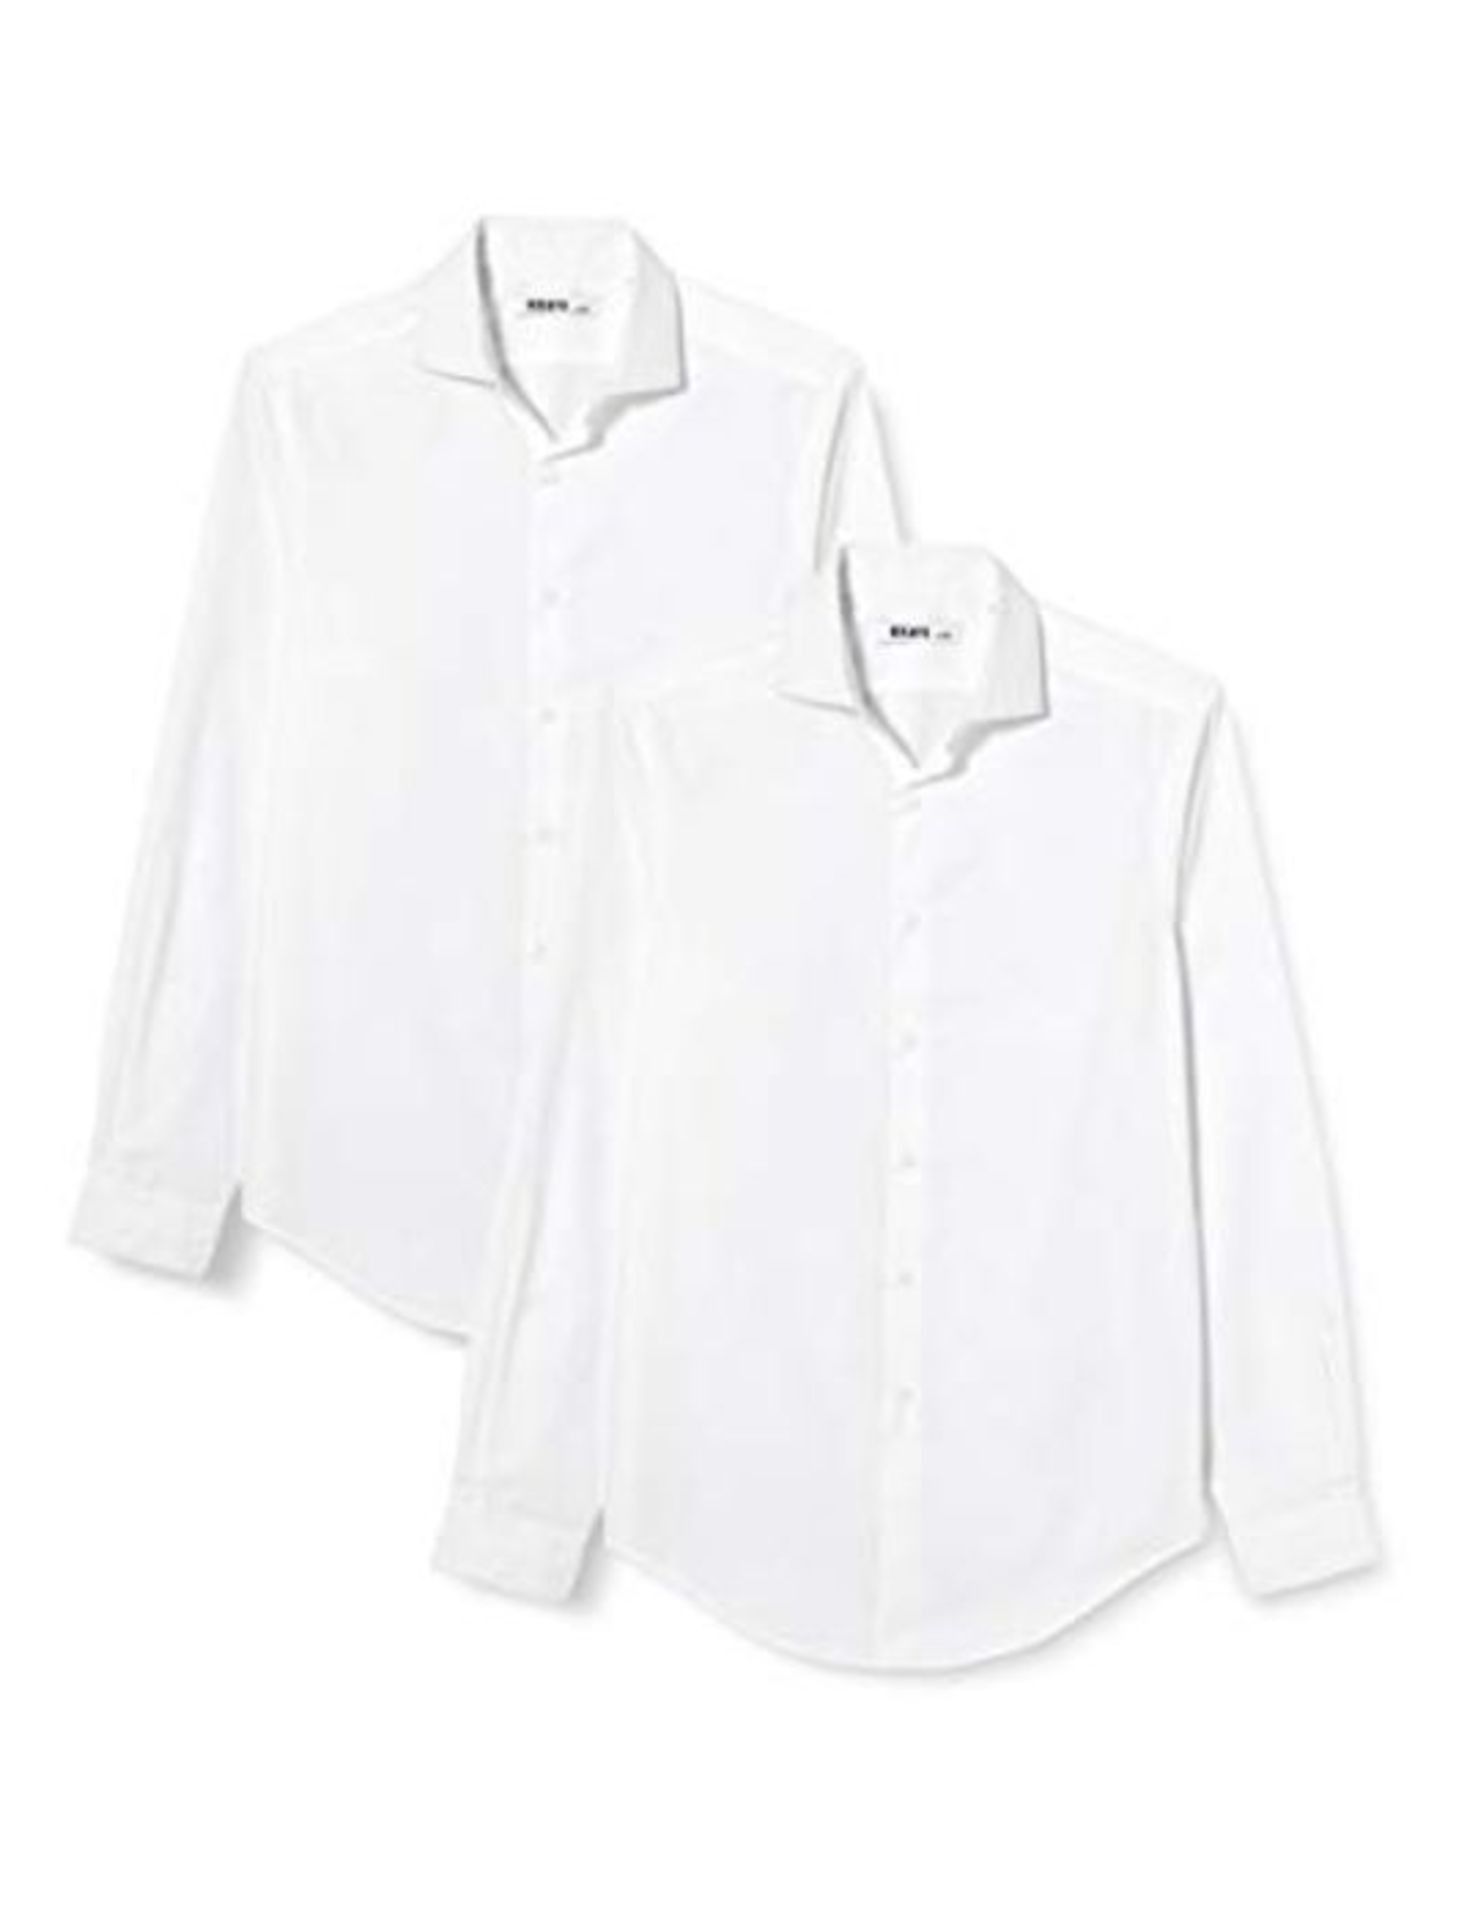 HIKARO HIK0024AM Formal/Business Shirts, White (White), 38, Pack of 2